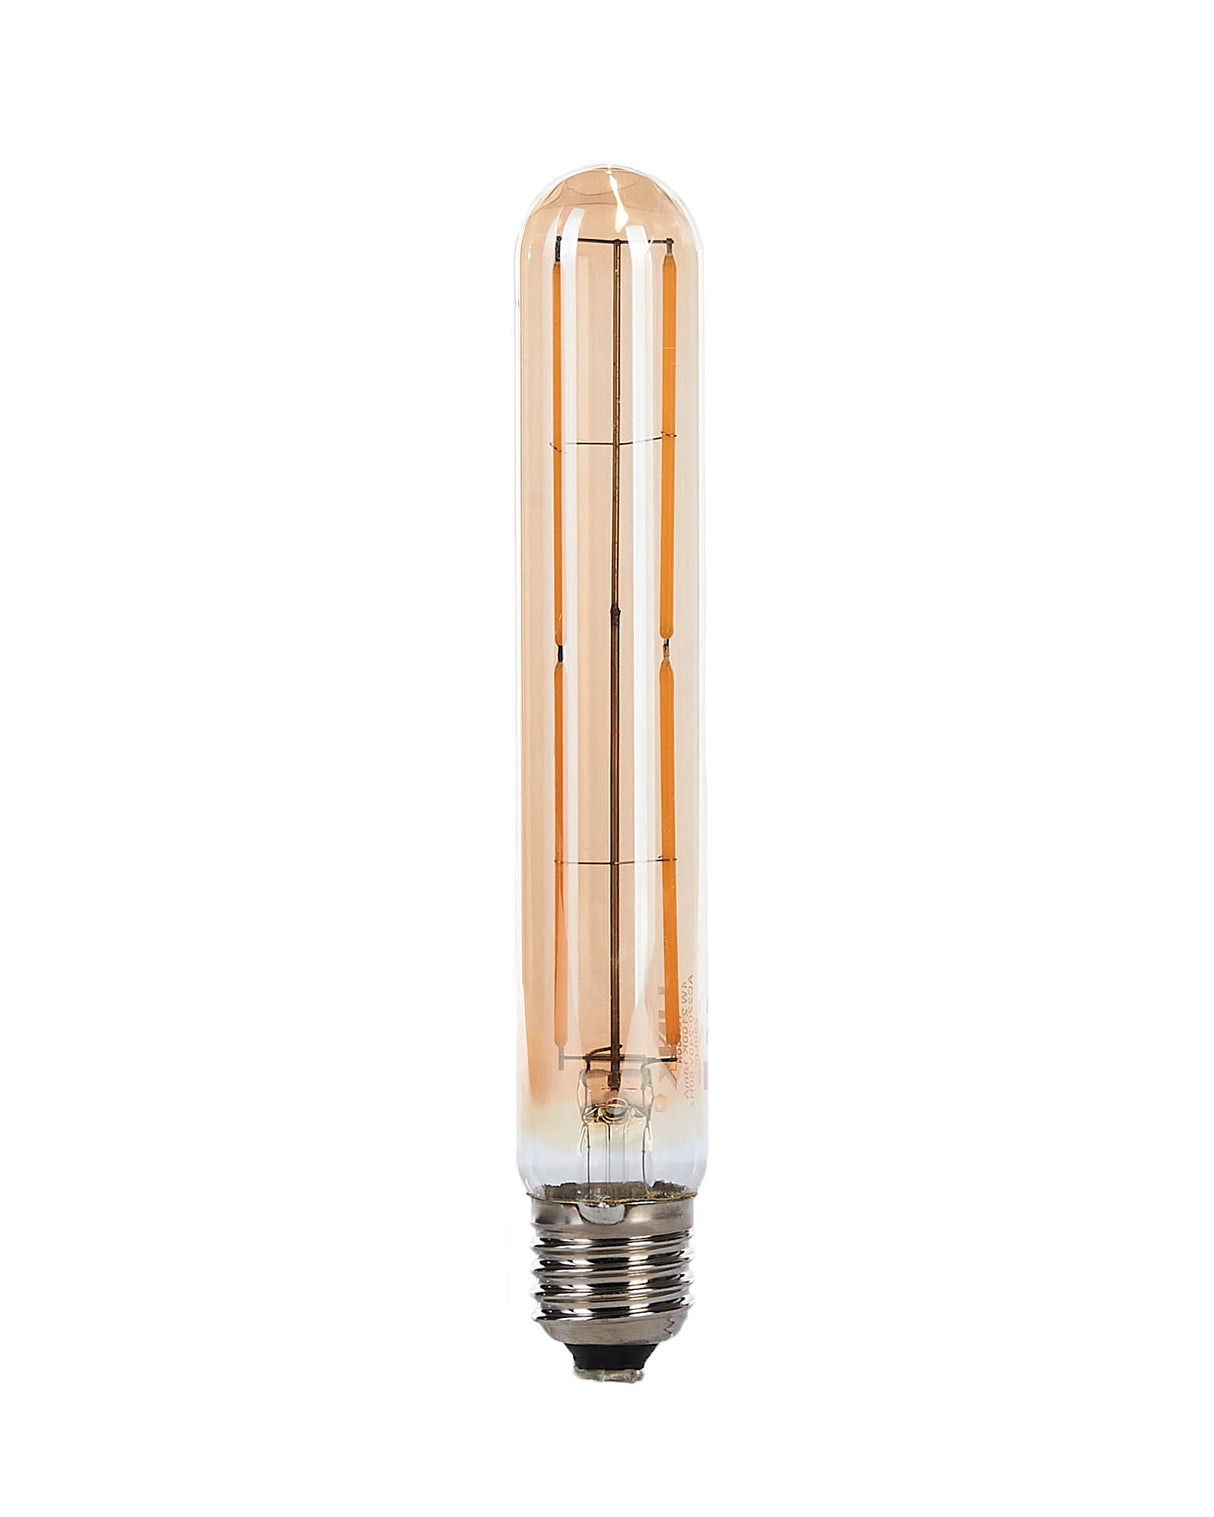 LINK FESTOON 4W E27 Dimmable Tubular Filament LED Bulb, Warm White